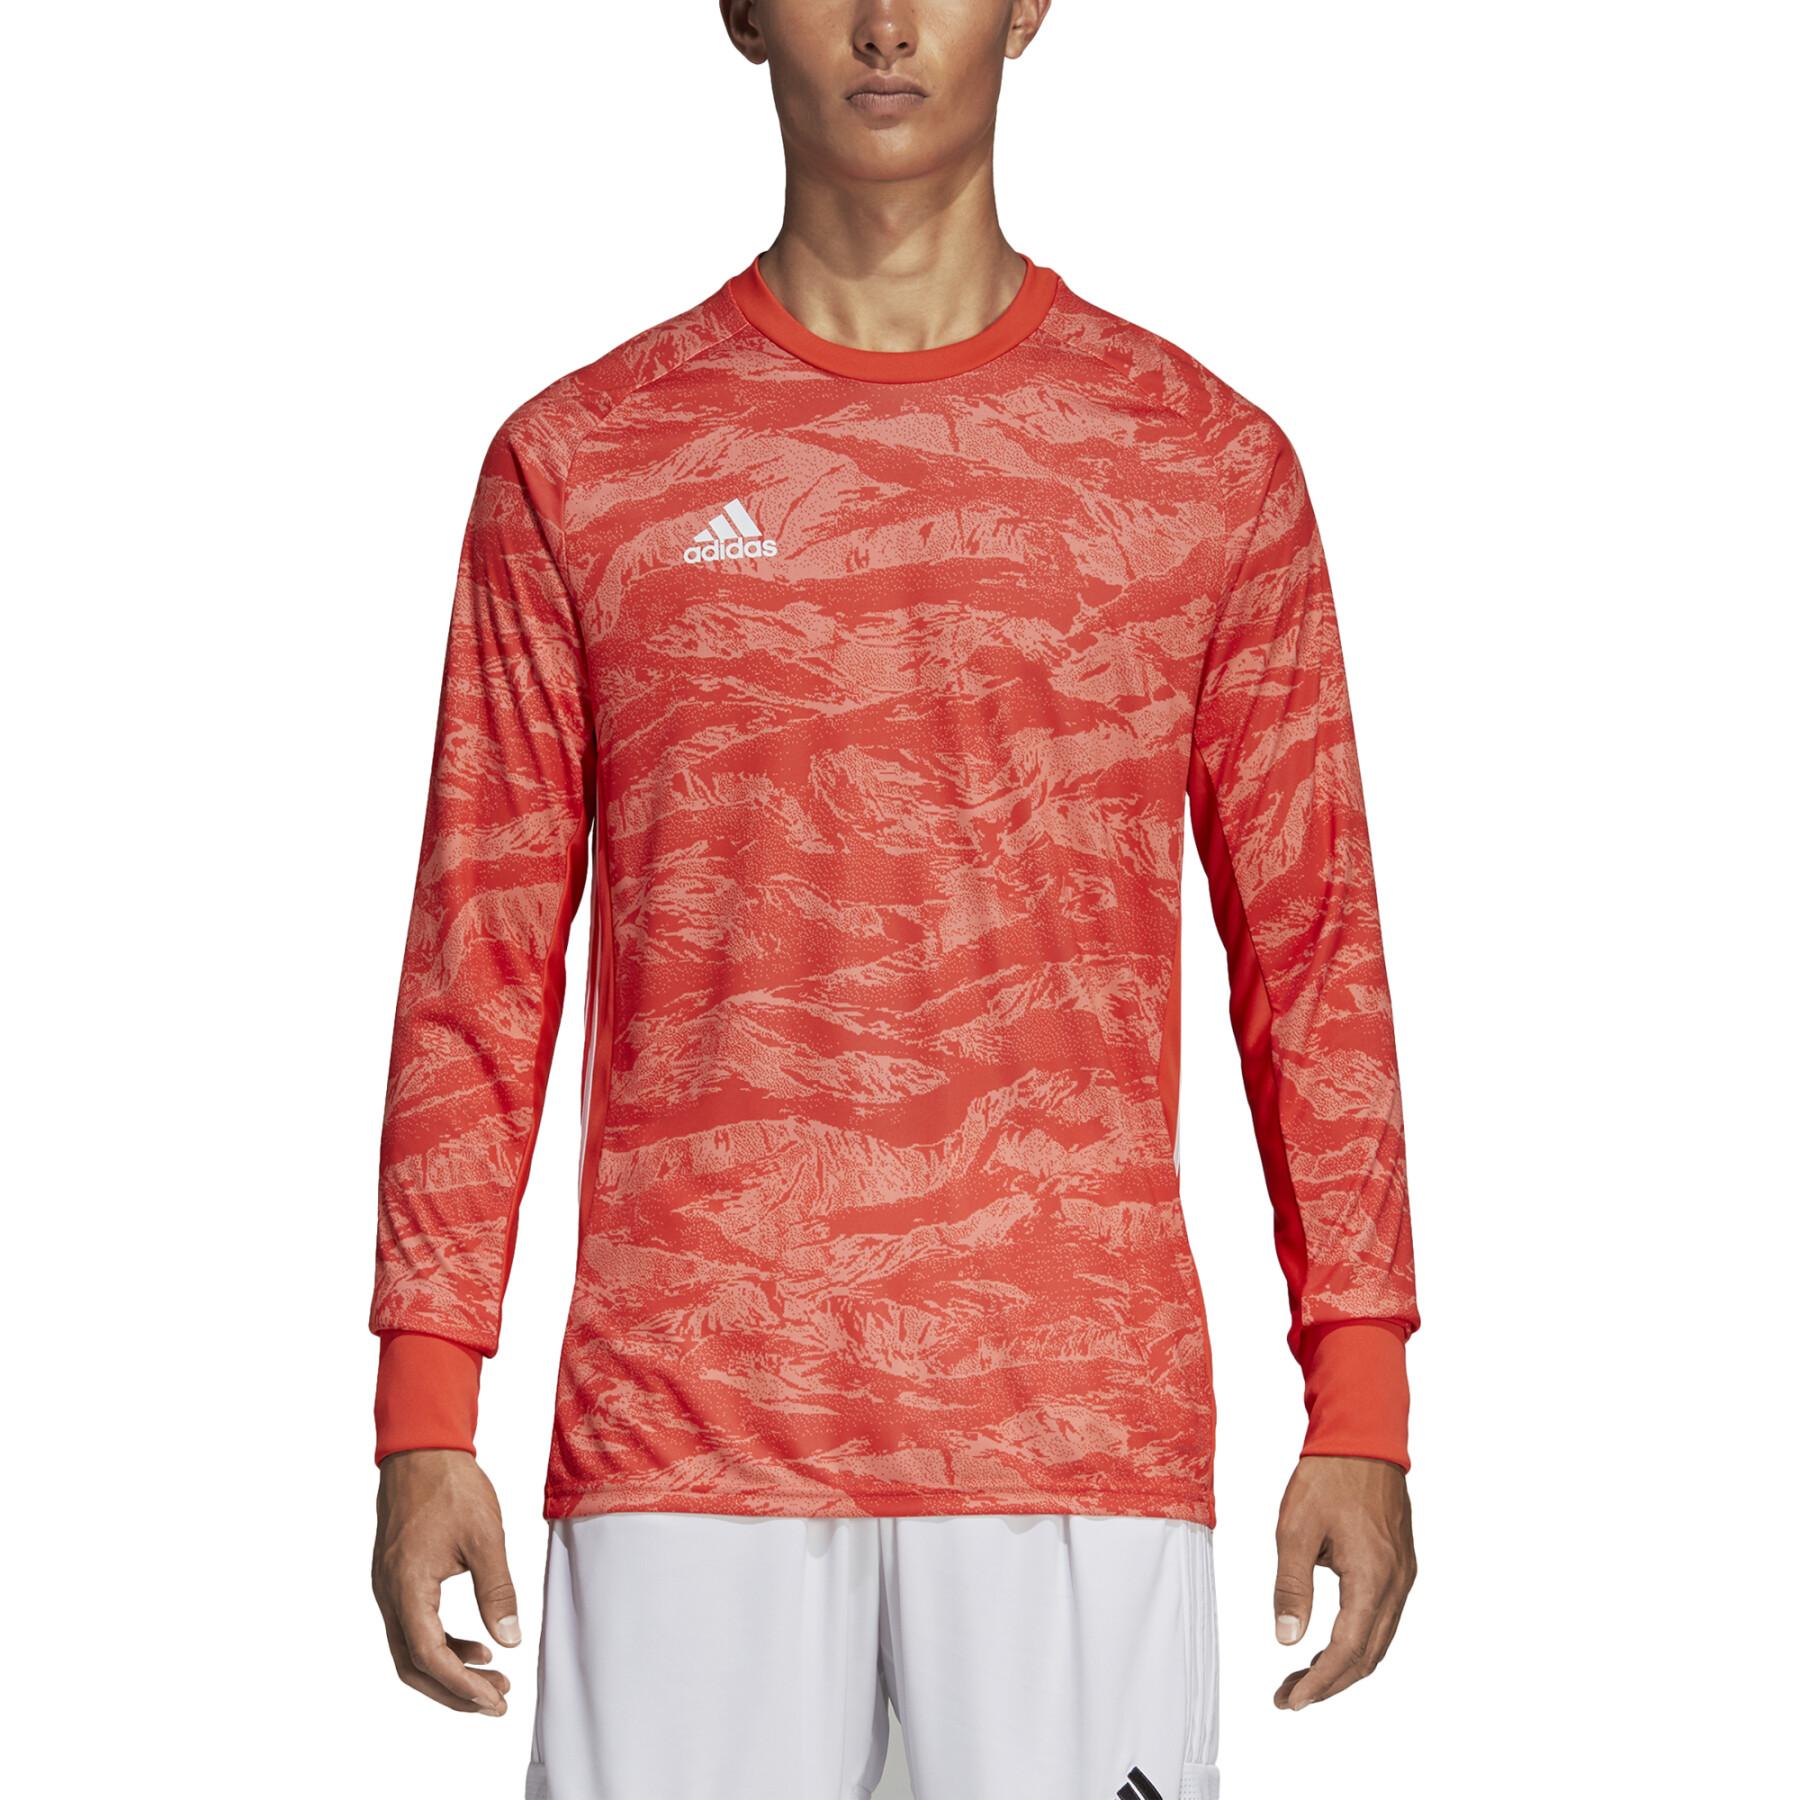 Algebraico Agacharse puramente Camiseta de portero adidas AdiPro 18 - Camisetas - Porteros - Fútbol